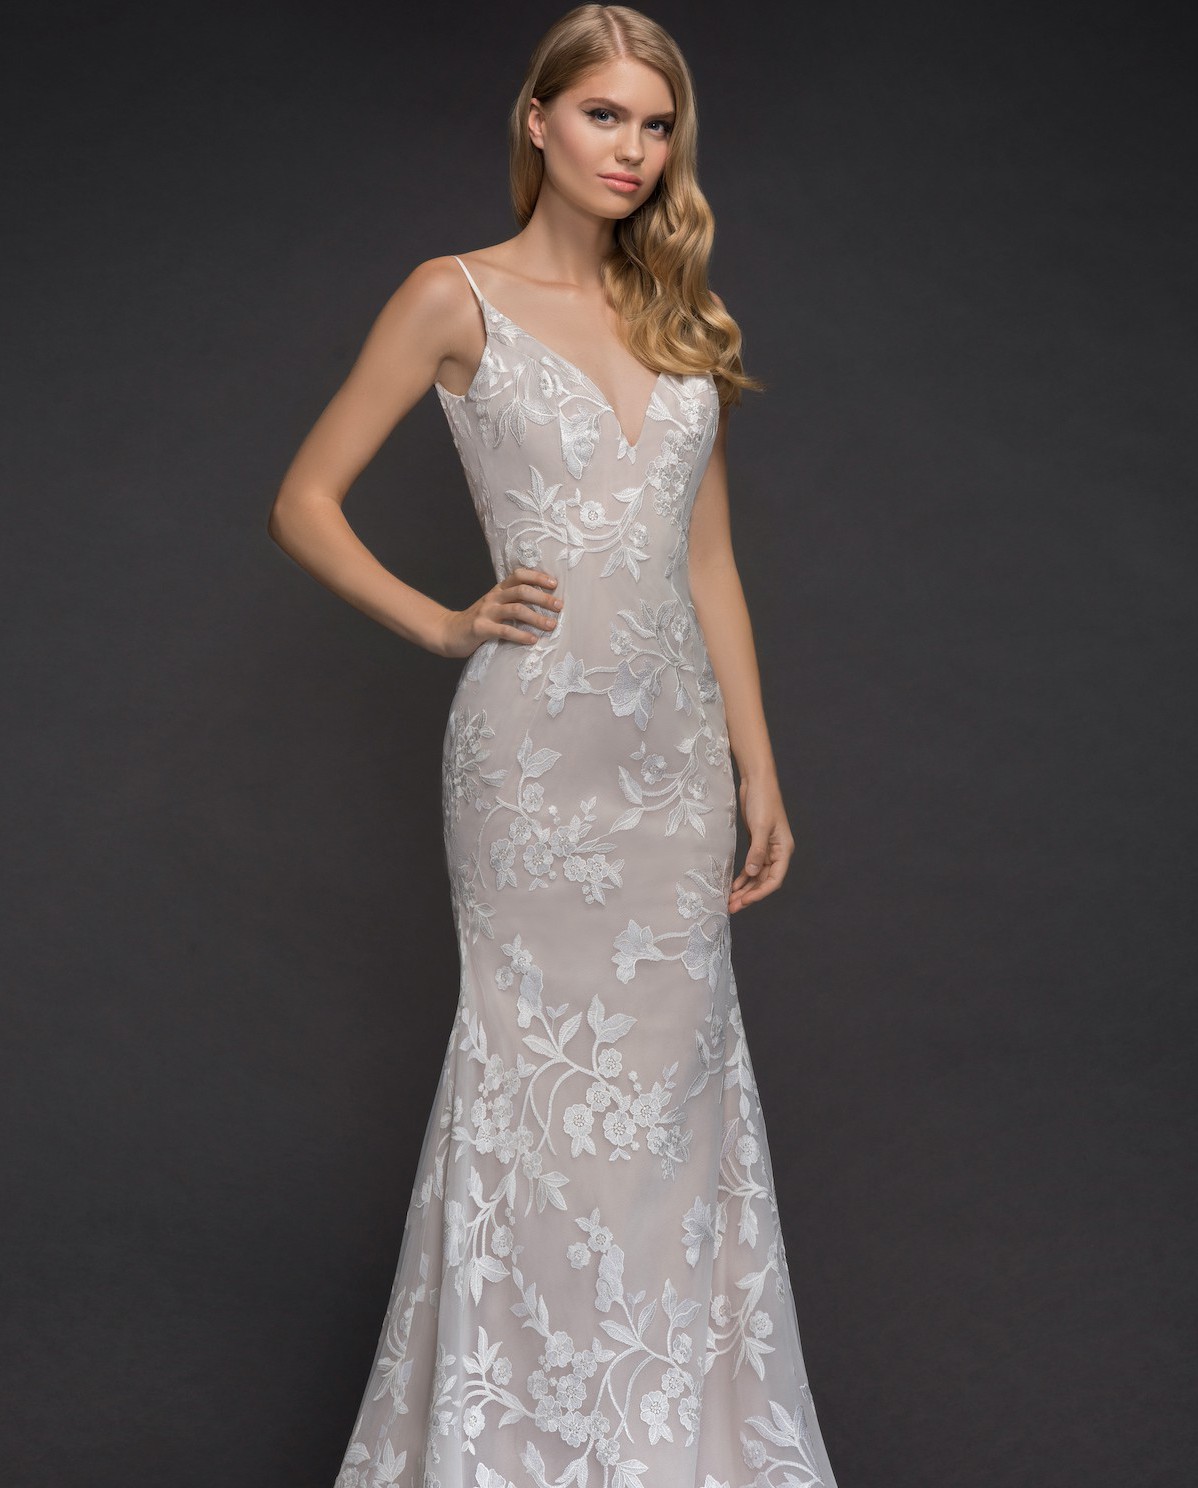 Blush by Hayley Paige Nessy Sample Wedding Dress Save 51% - Stillwhite